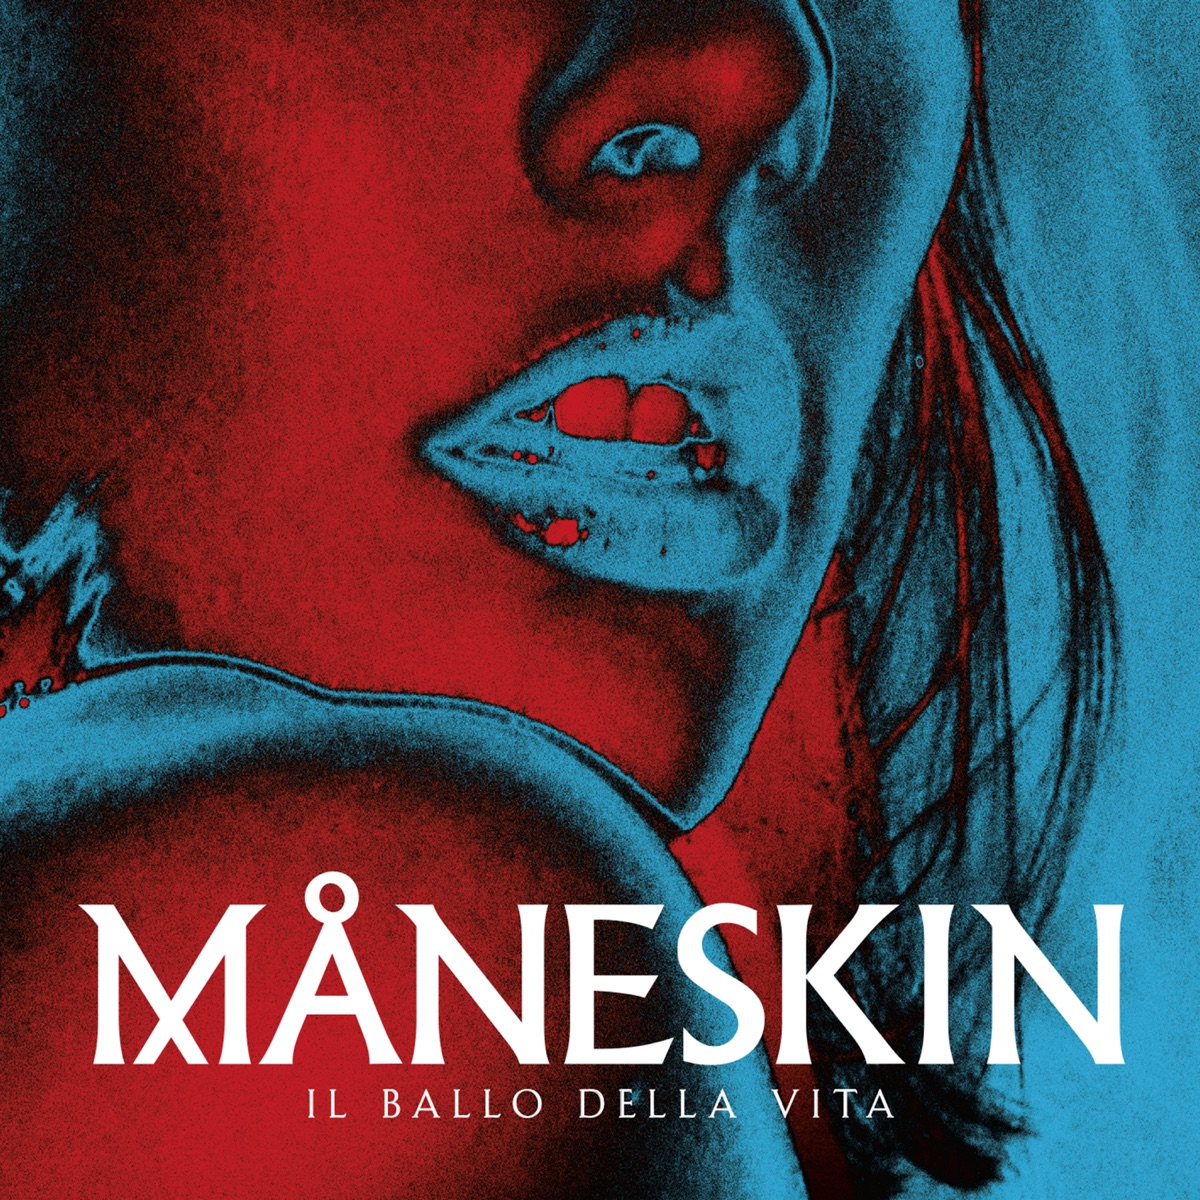 Comprar cd online Maneskin - Rush Deluxe